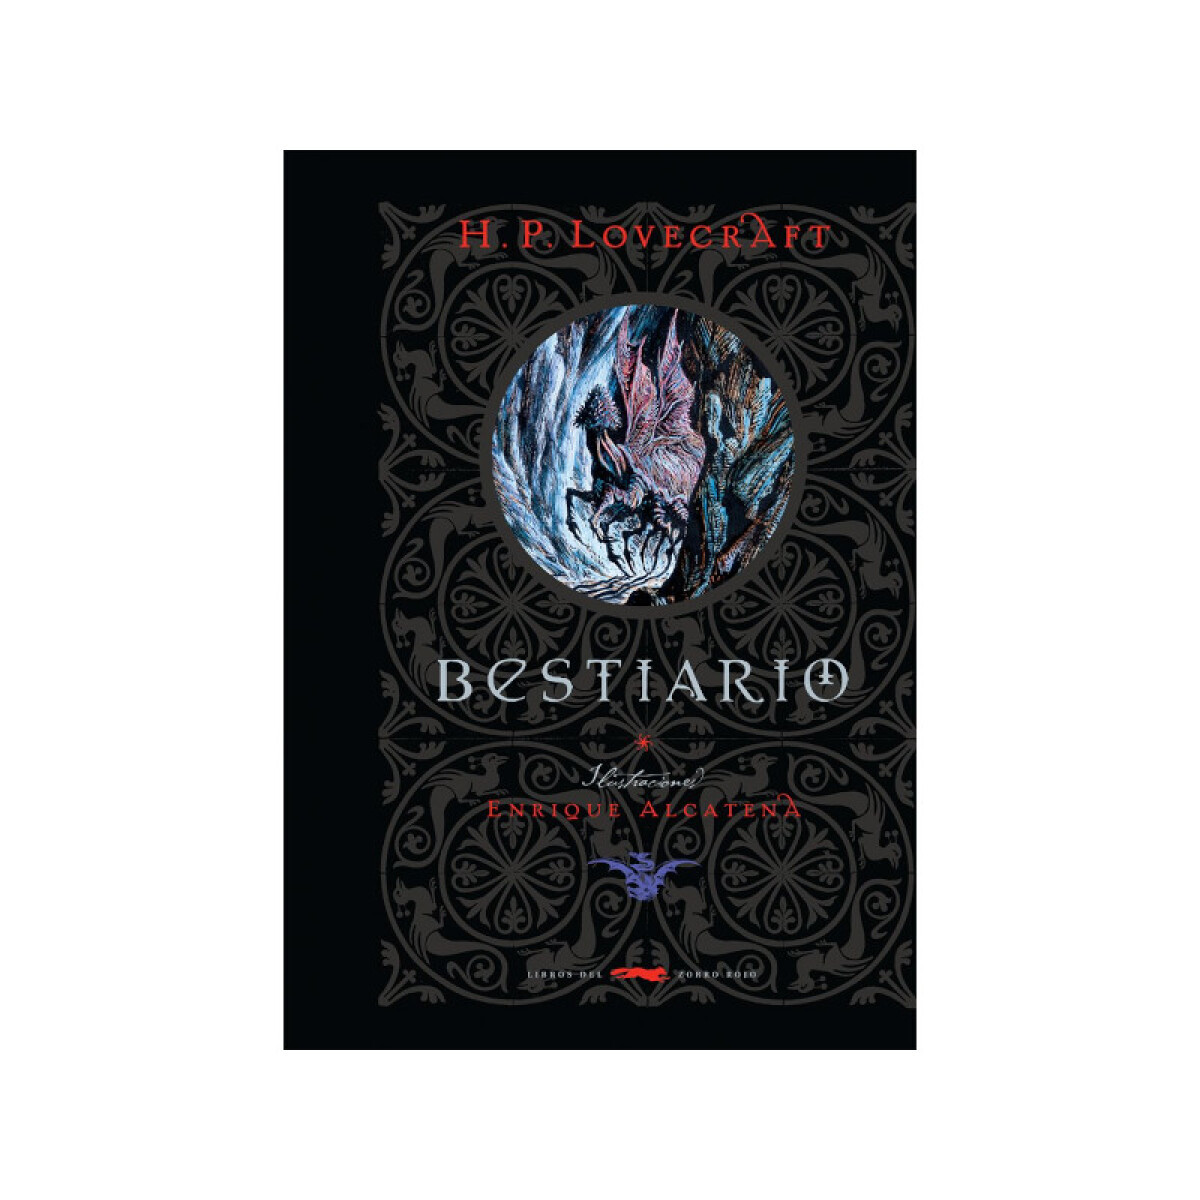 Bestiario - H.P Lovecraft 